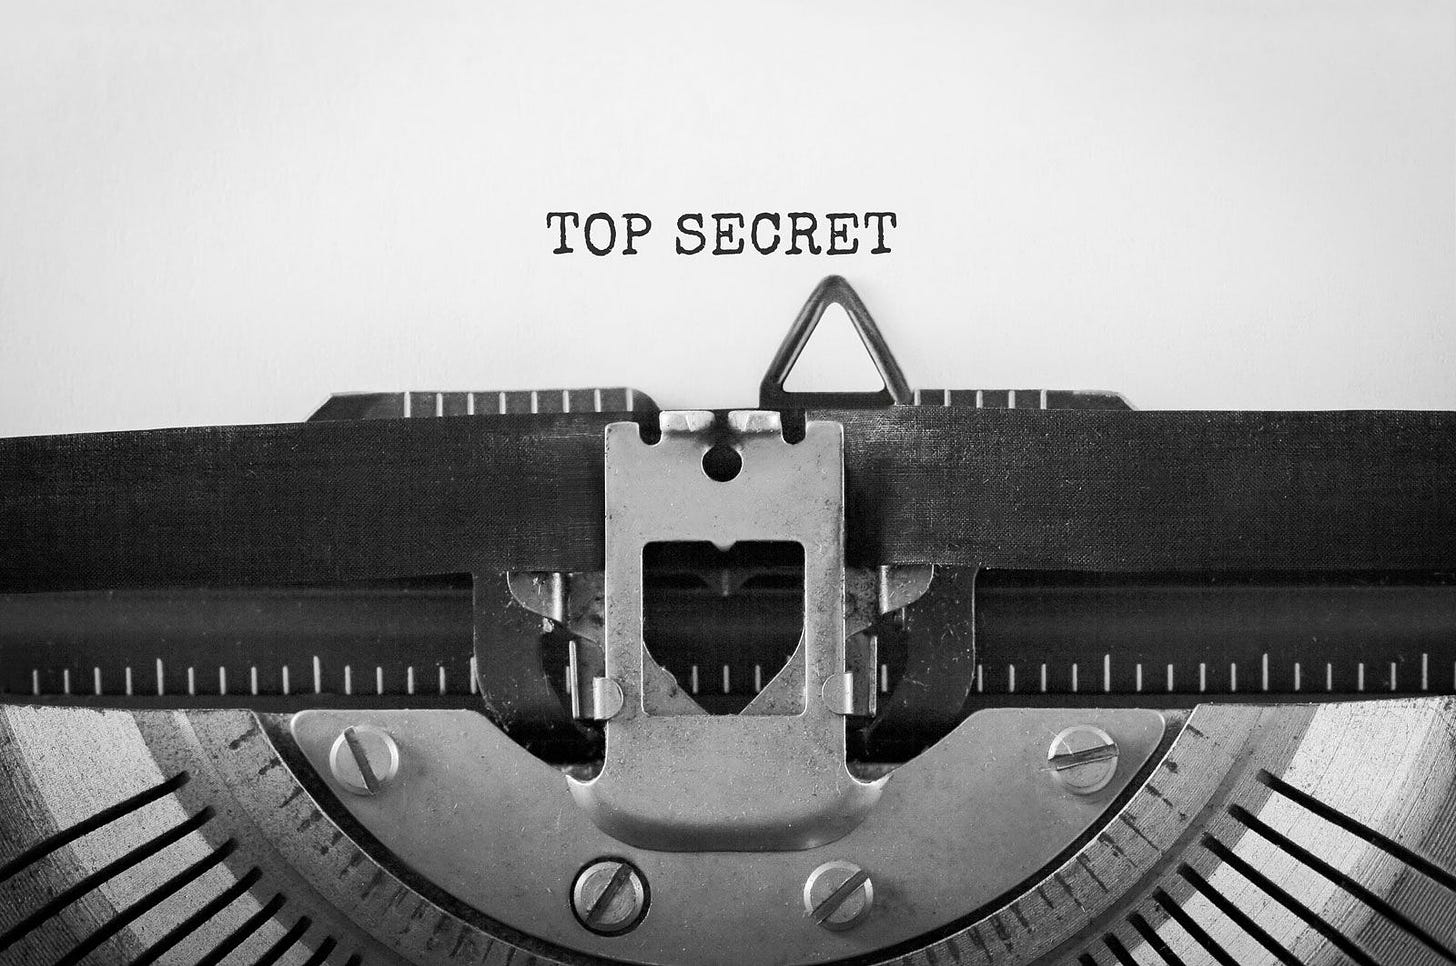 How Secret Is Top Secret? | Britannica